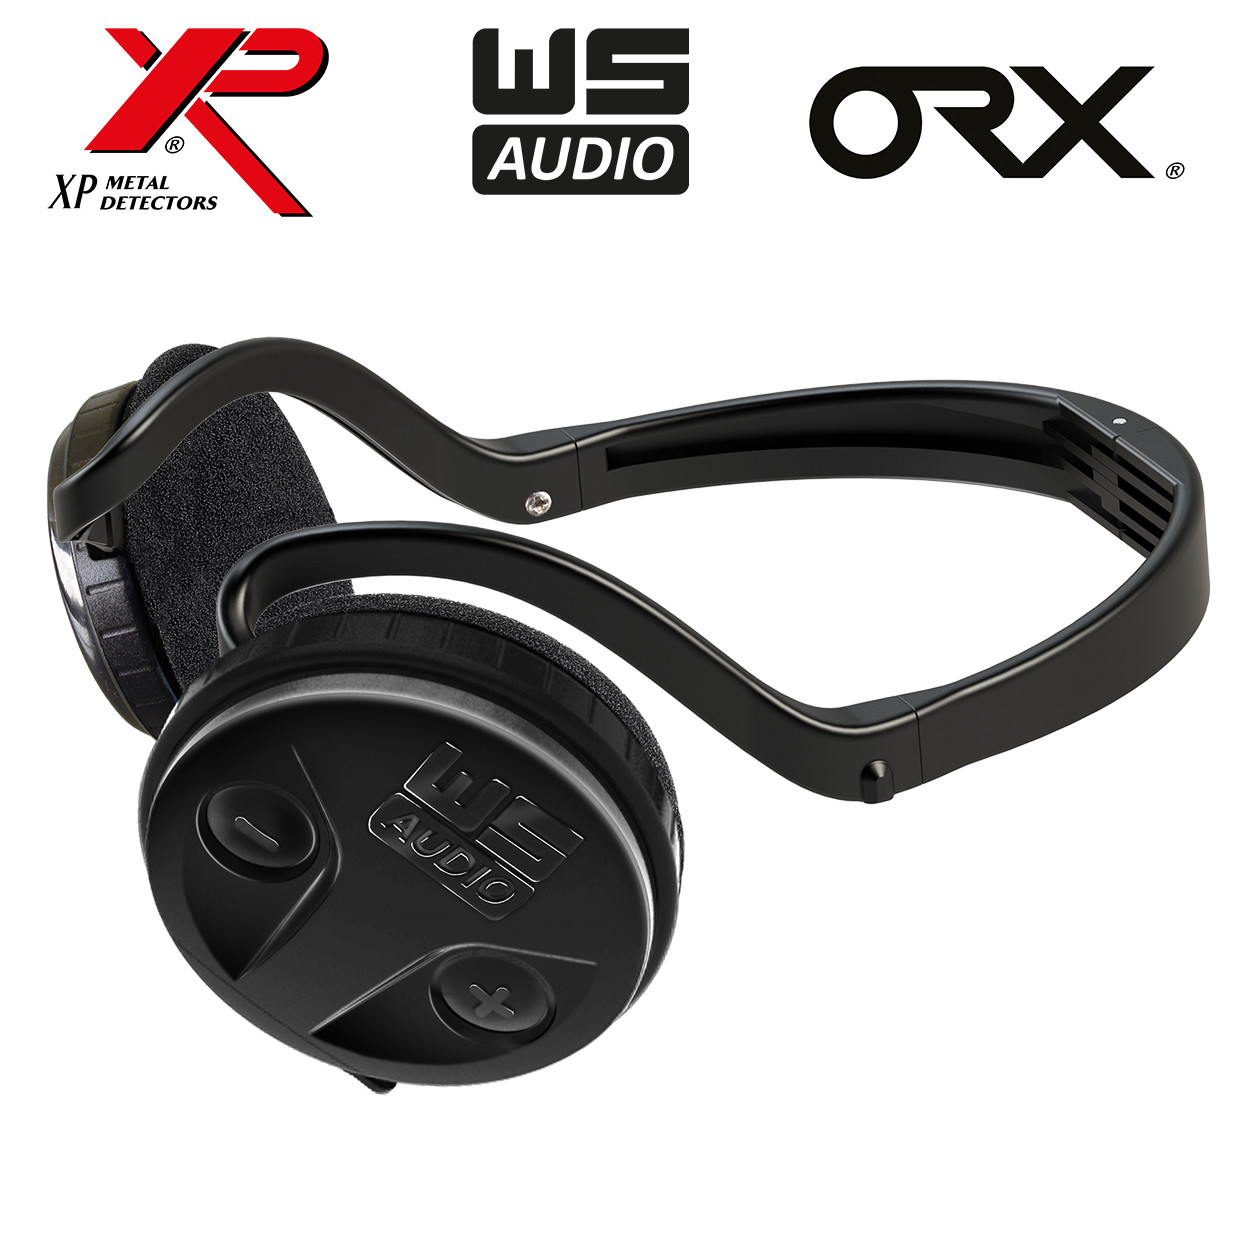 XP ORX 22 Metalldetektor HF RC WSA